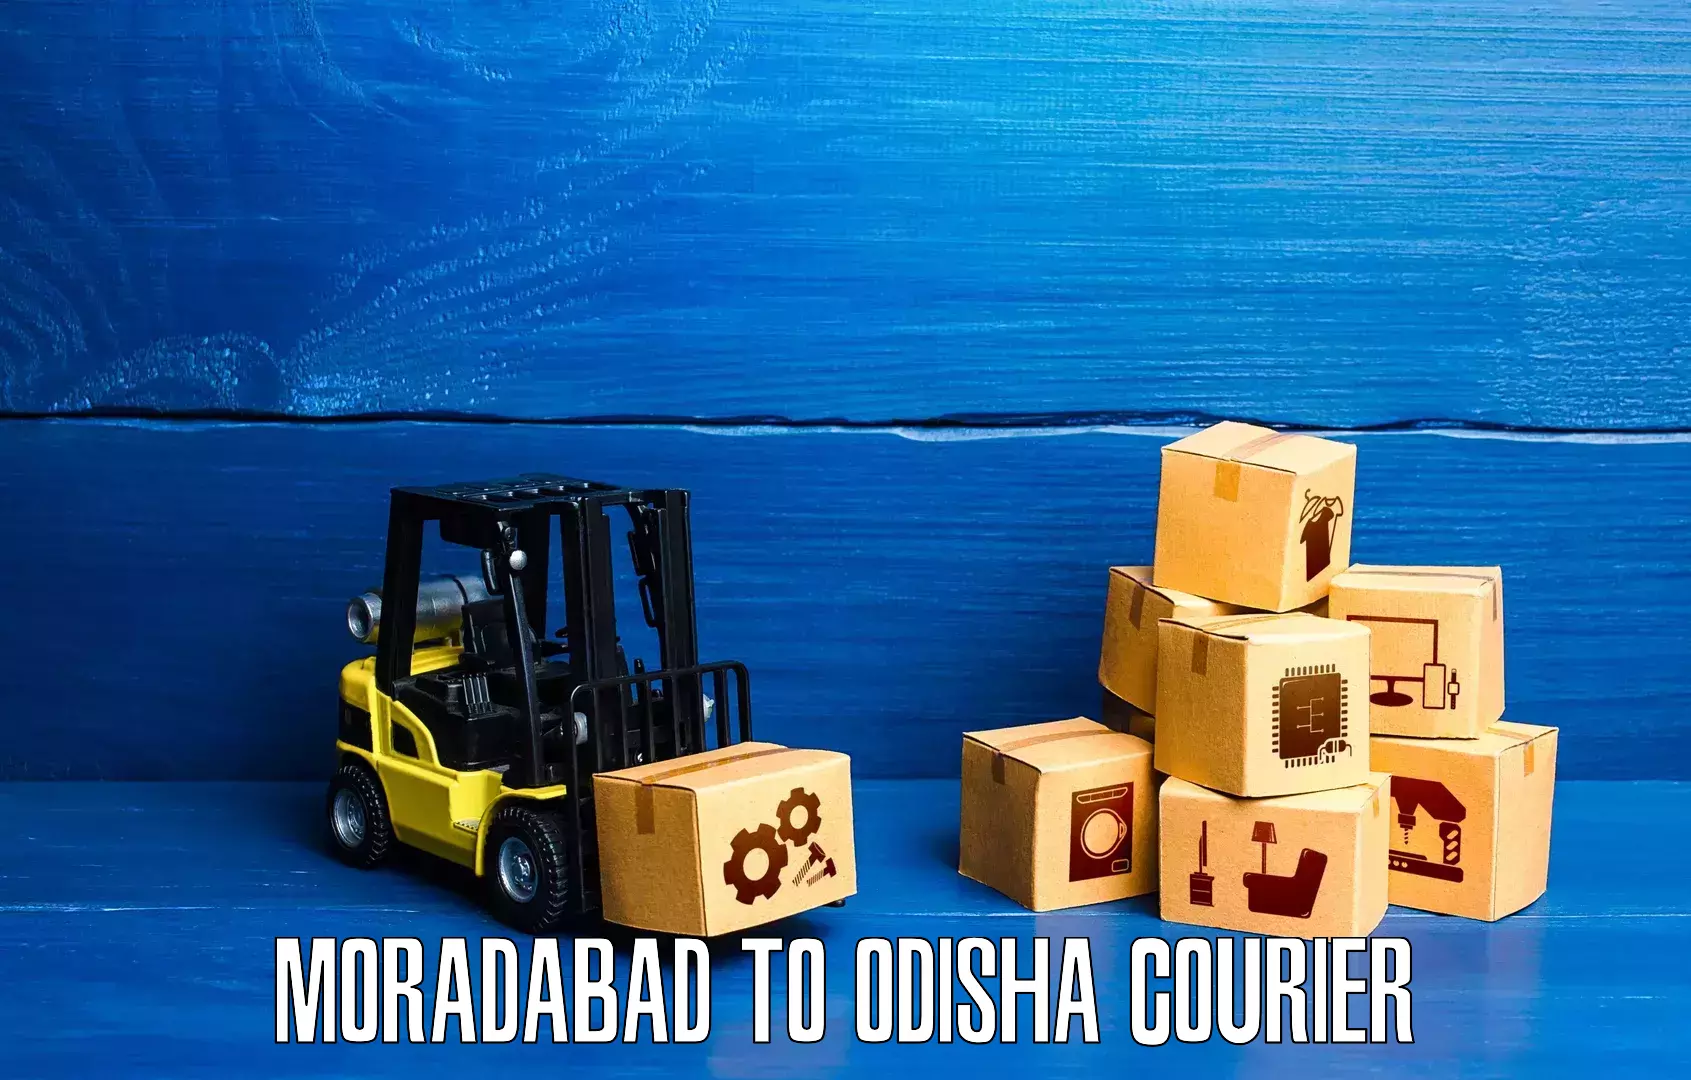 Courier service innovation Moradabad to Chandbali